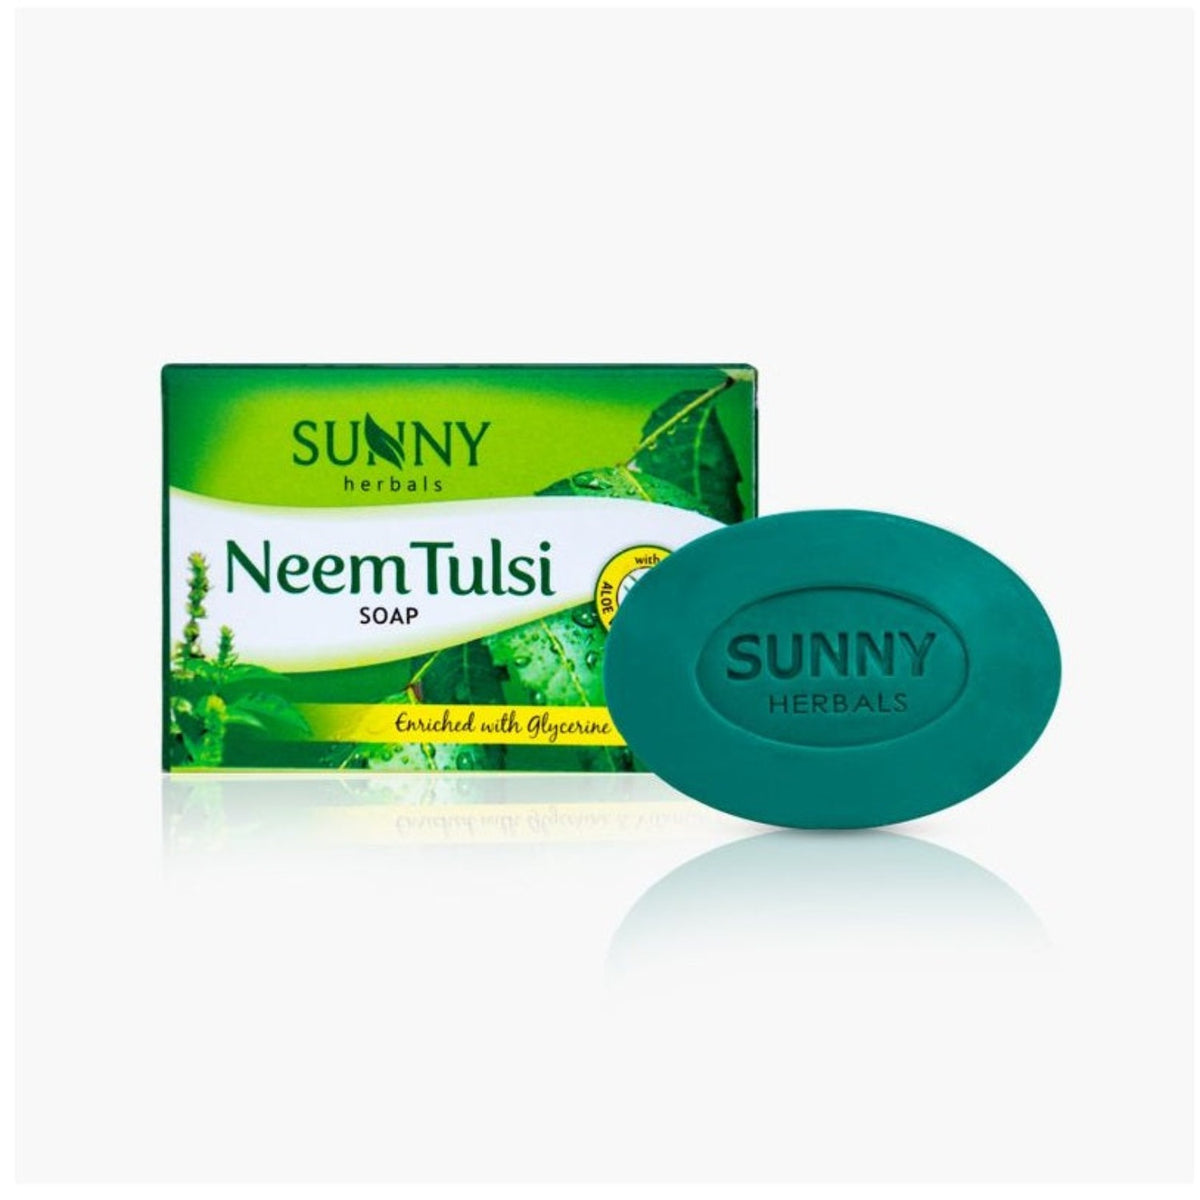 Bakson's Sunny Herbals Neem Tulsi mit Neem, Tulsi, Calendula und Aloe Vera für gesunde Hautseife, 75 g